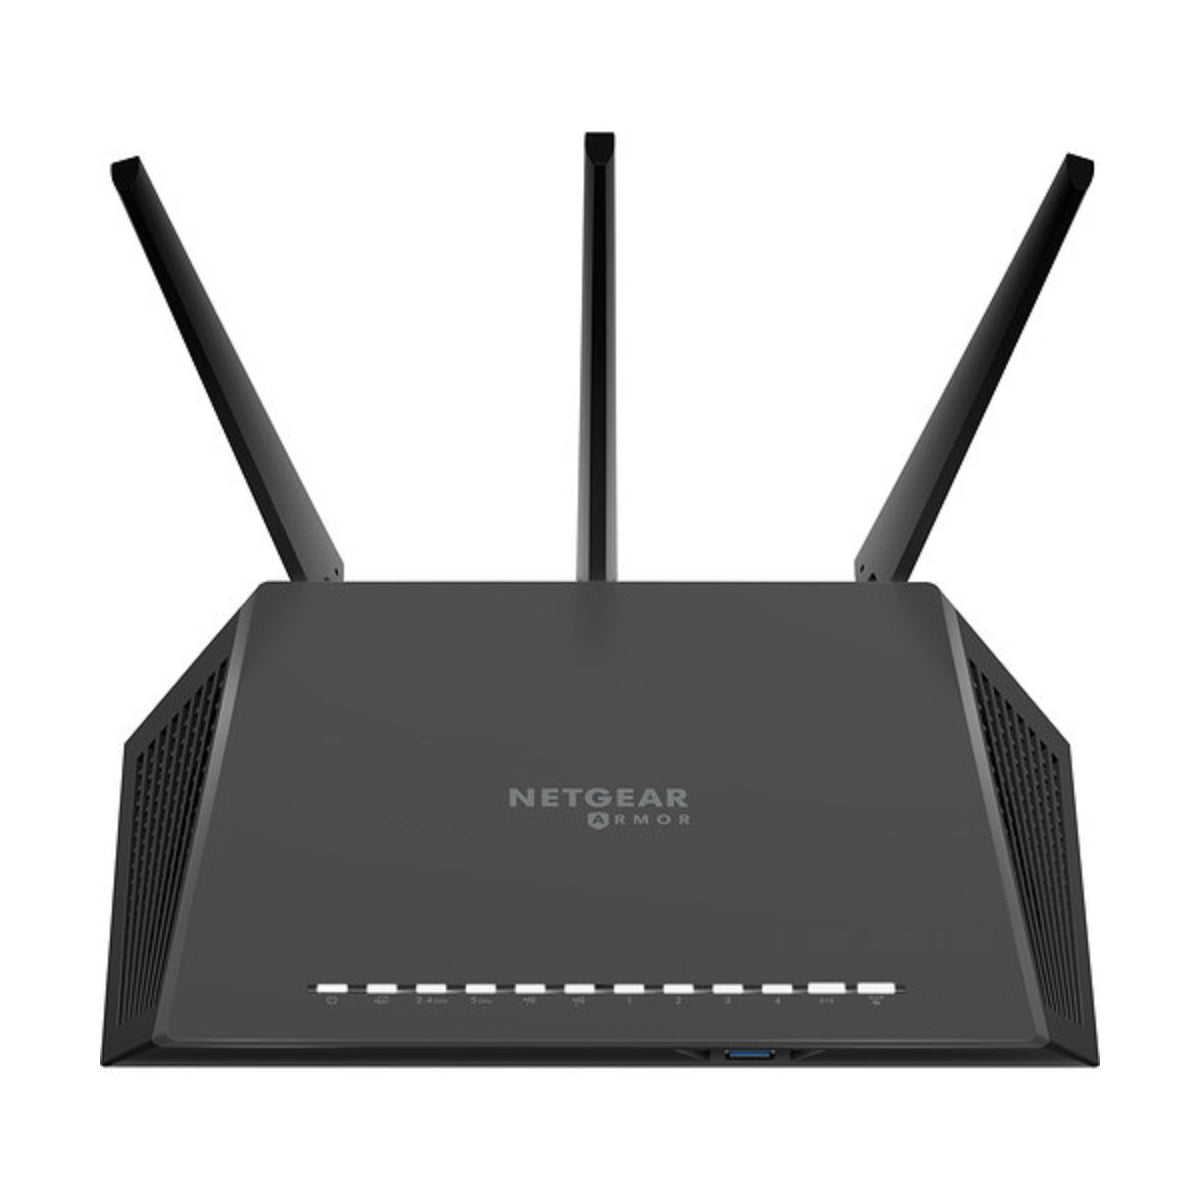 Netgear RS400 Nighthawk AC2300 Cyber security Wi-Fi Router